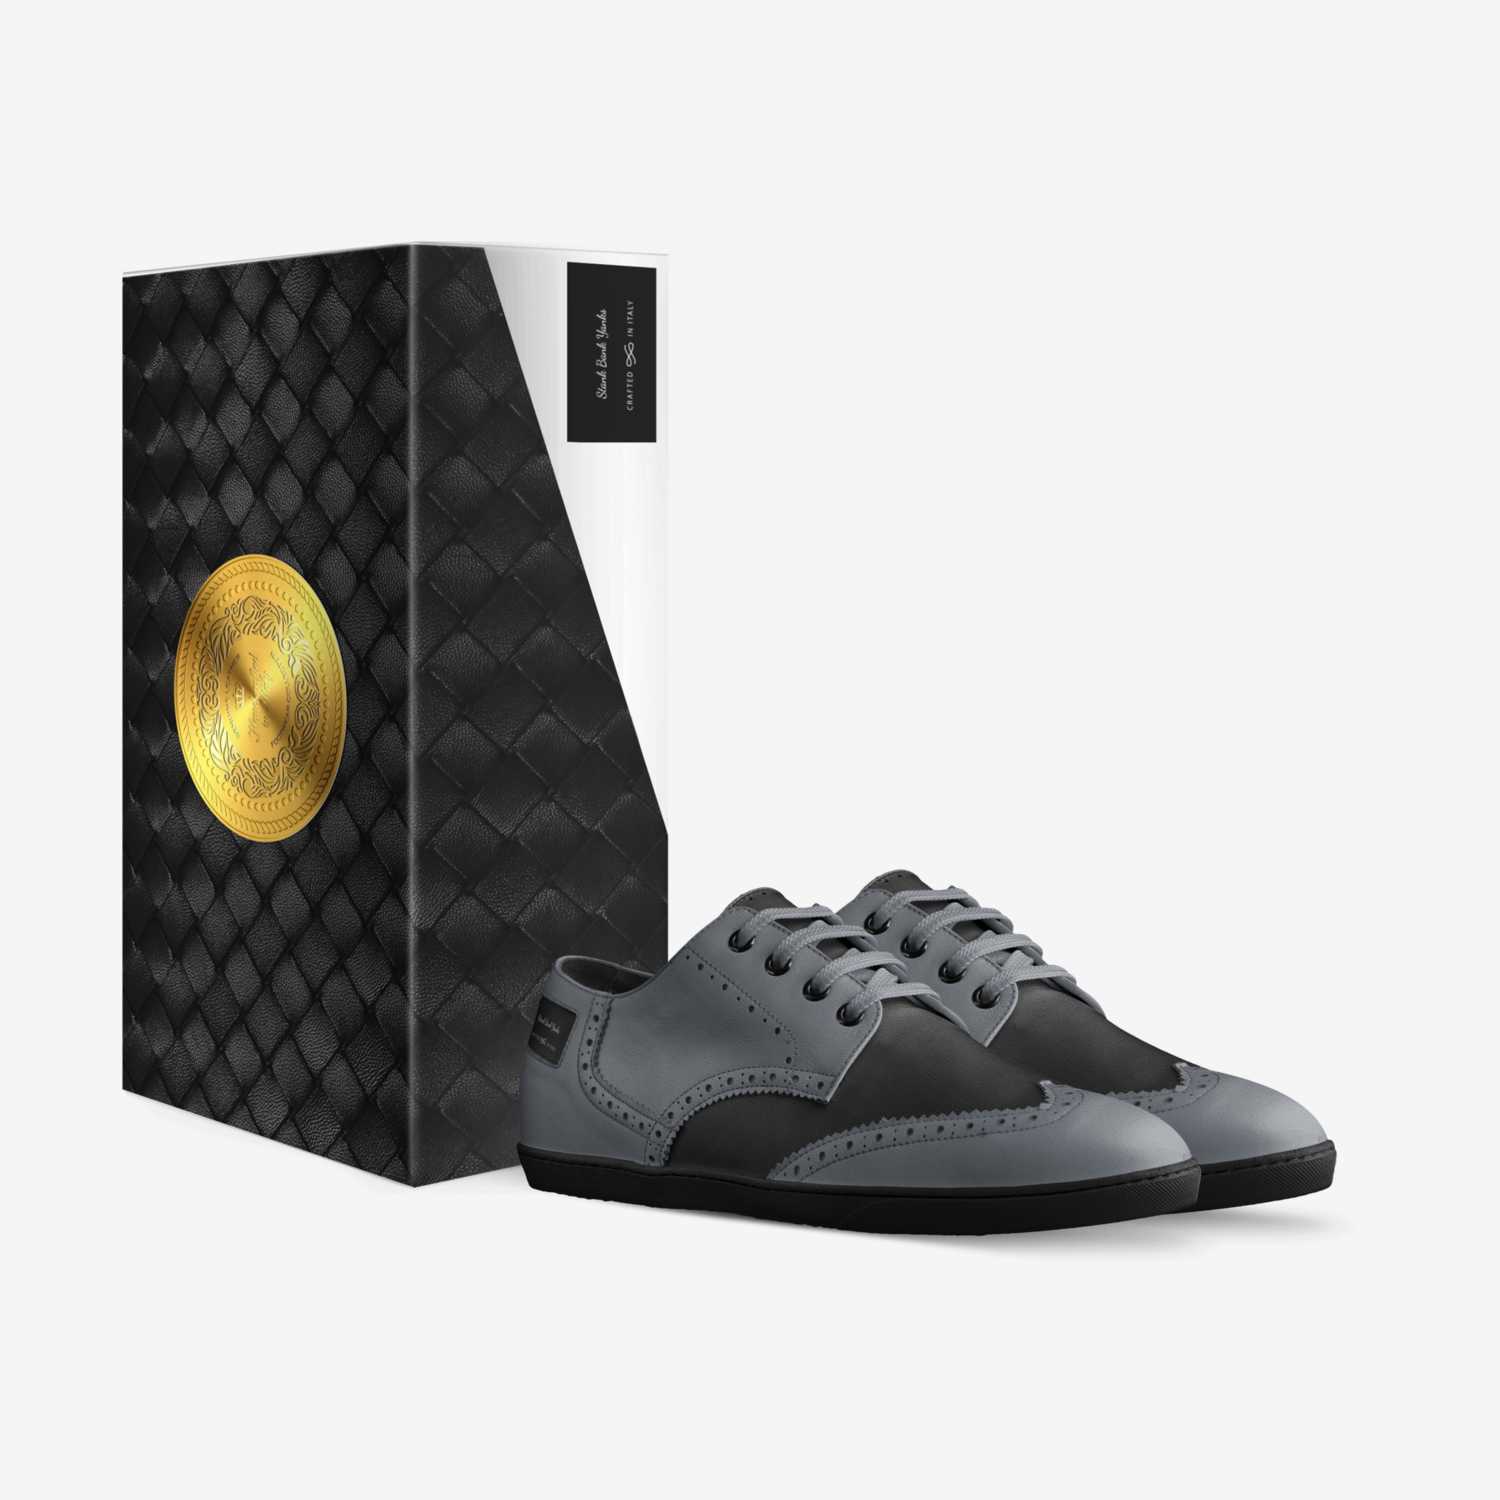 Yanks custom made in Italy shoes by Bosslifesav | Box view